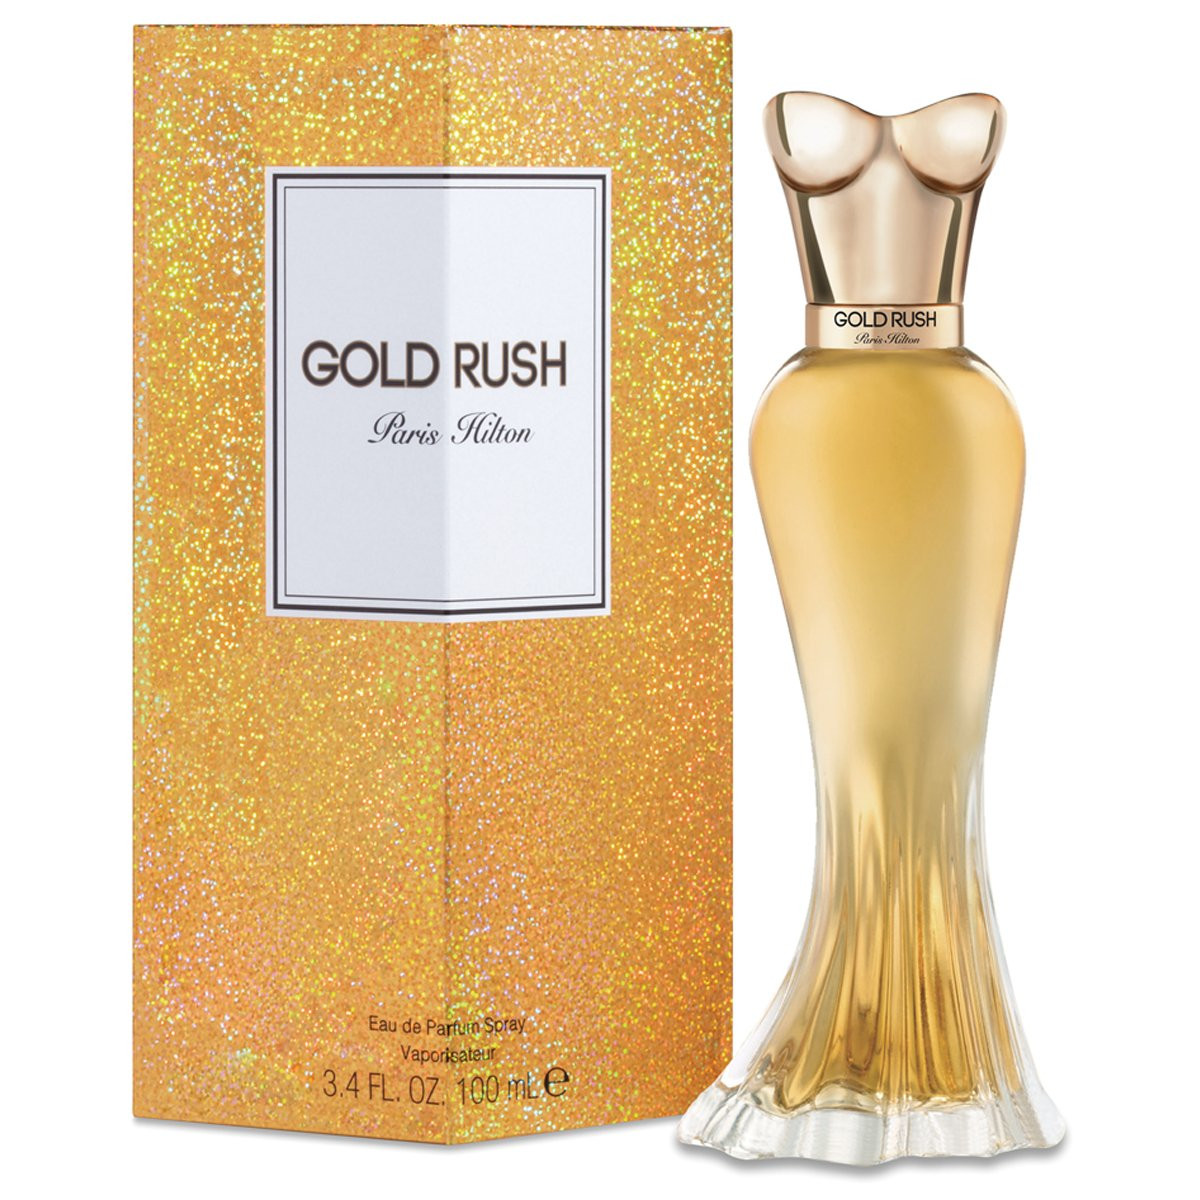 Paris Hilton, gold rush fragrance